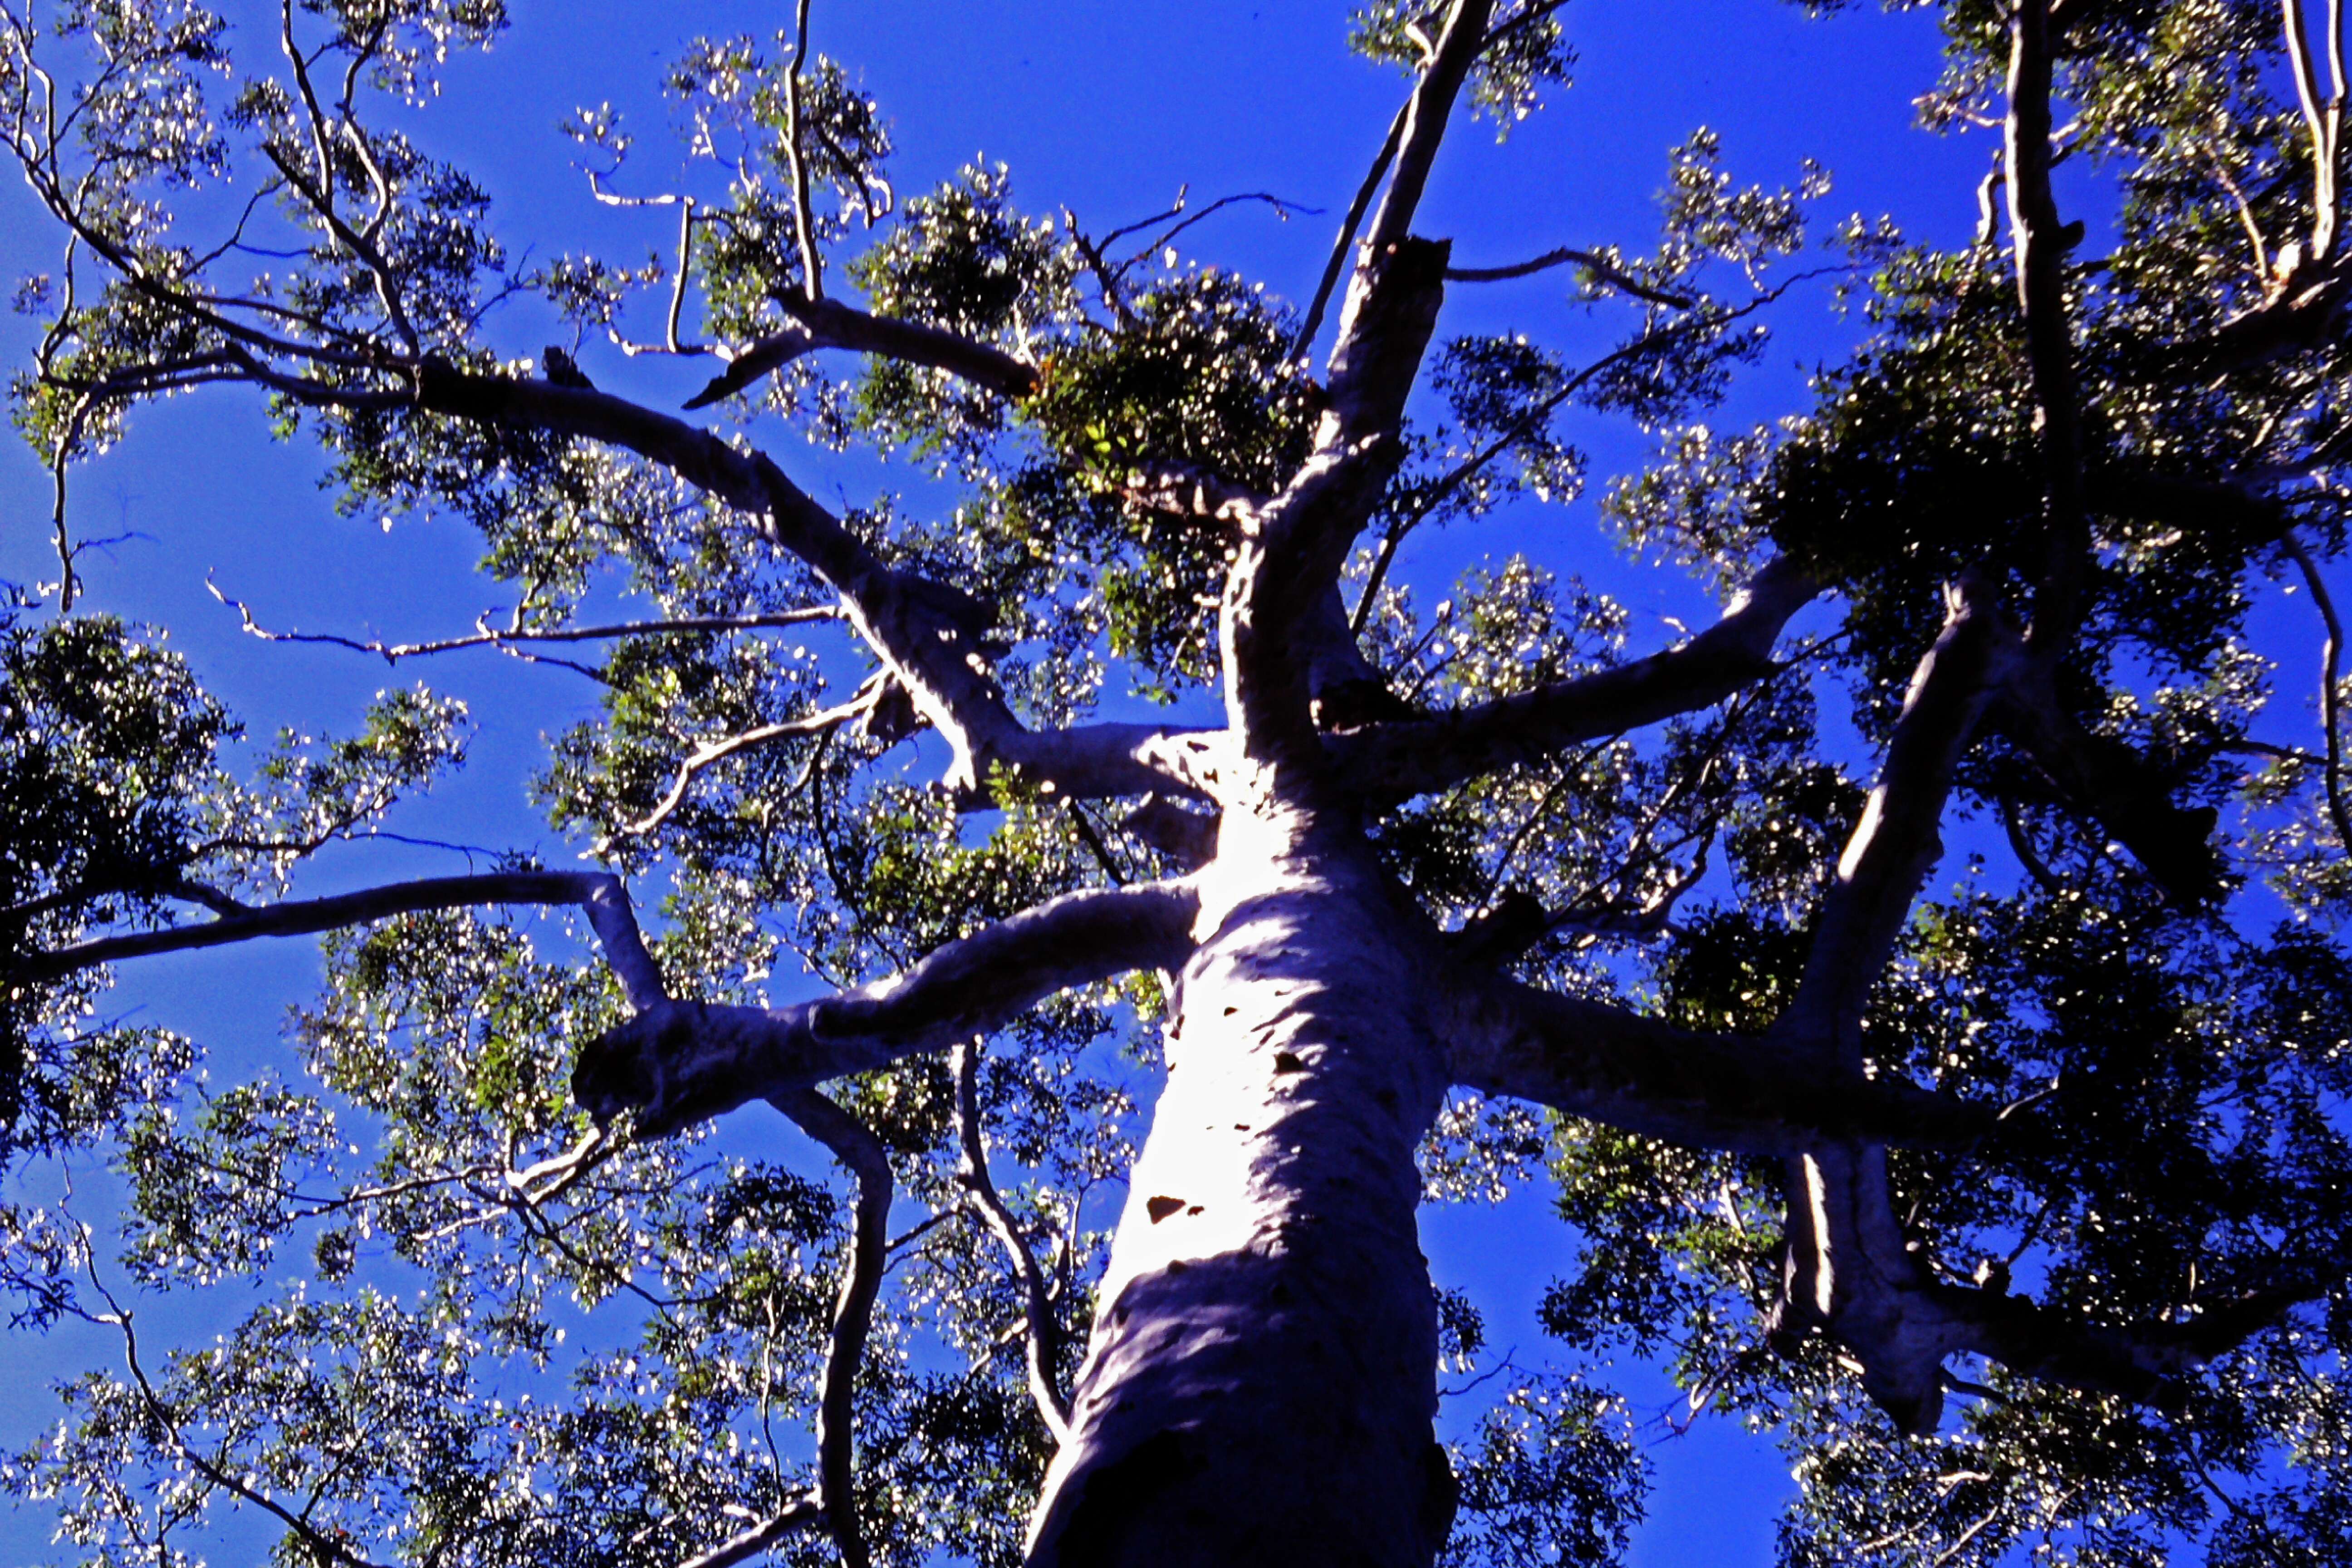 Image of grand eucalyptus